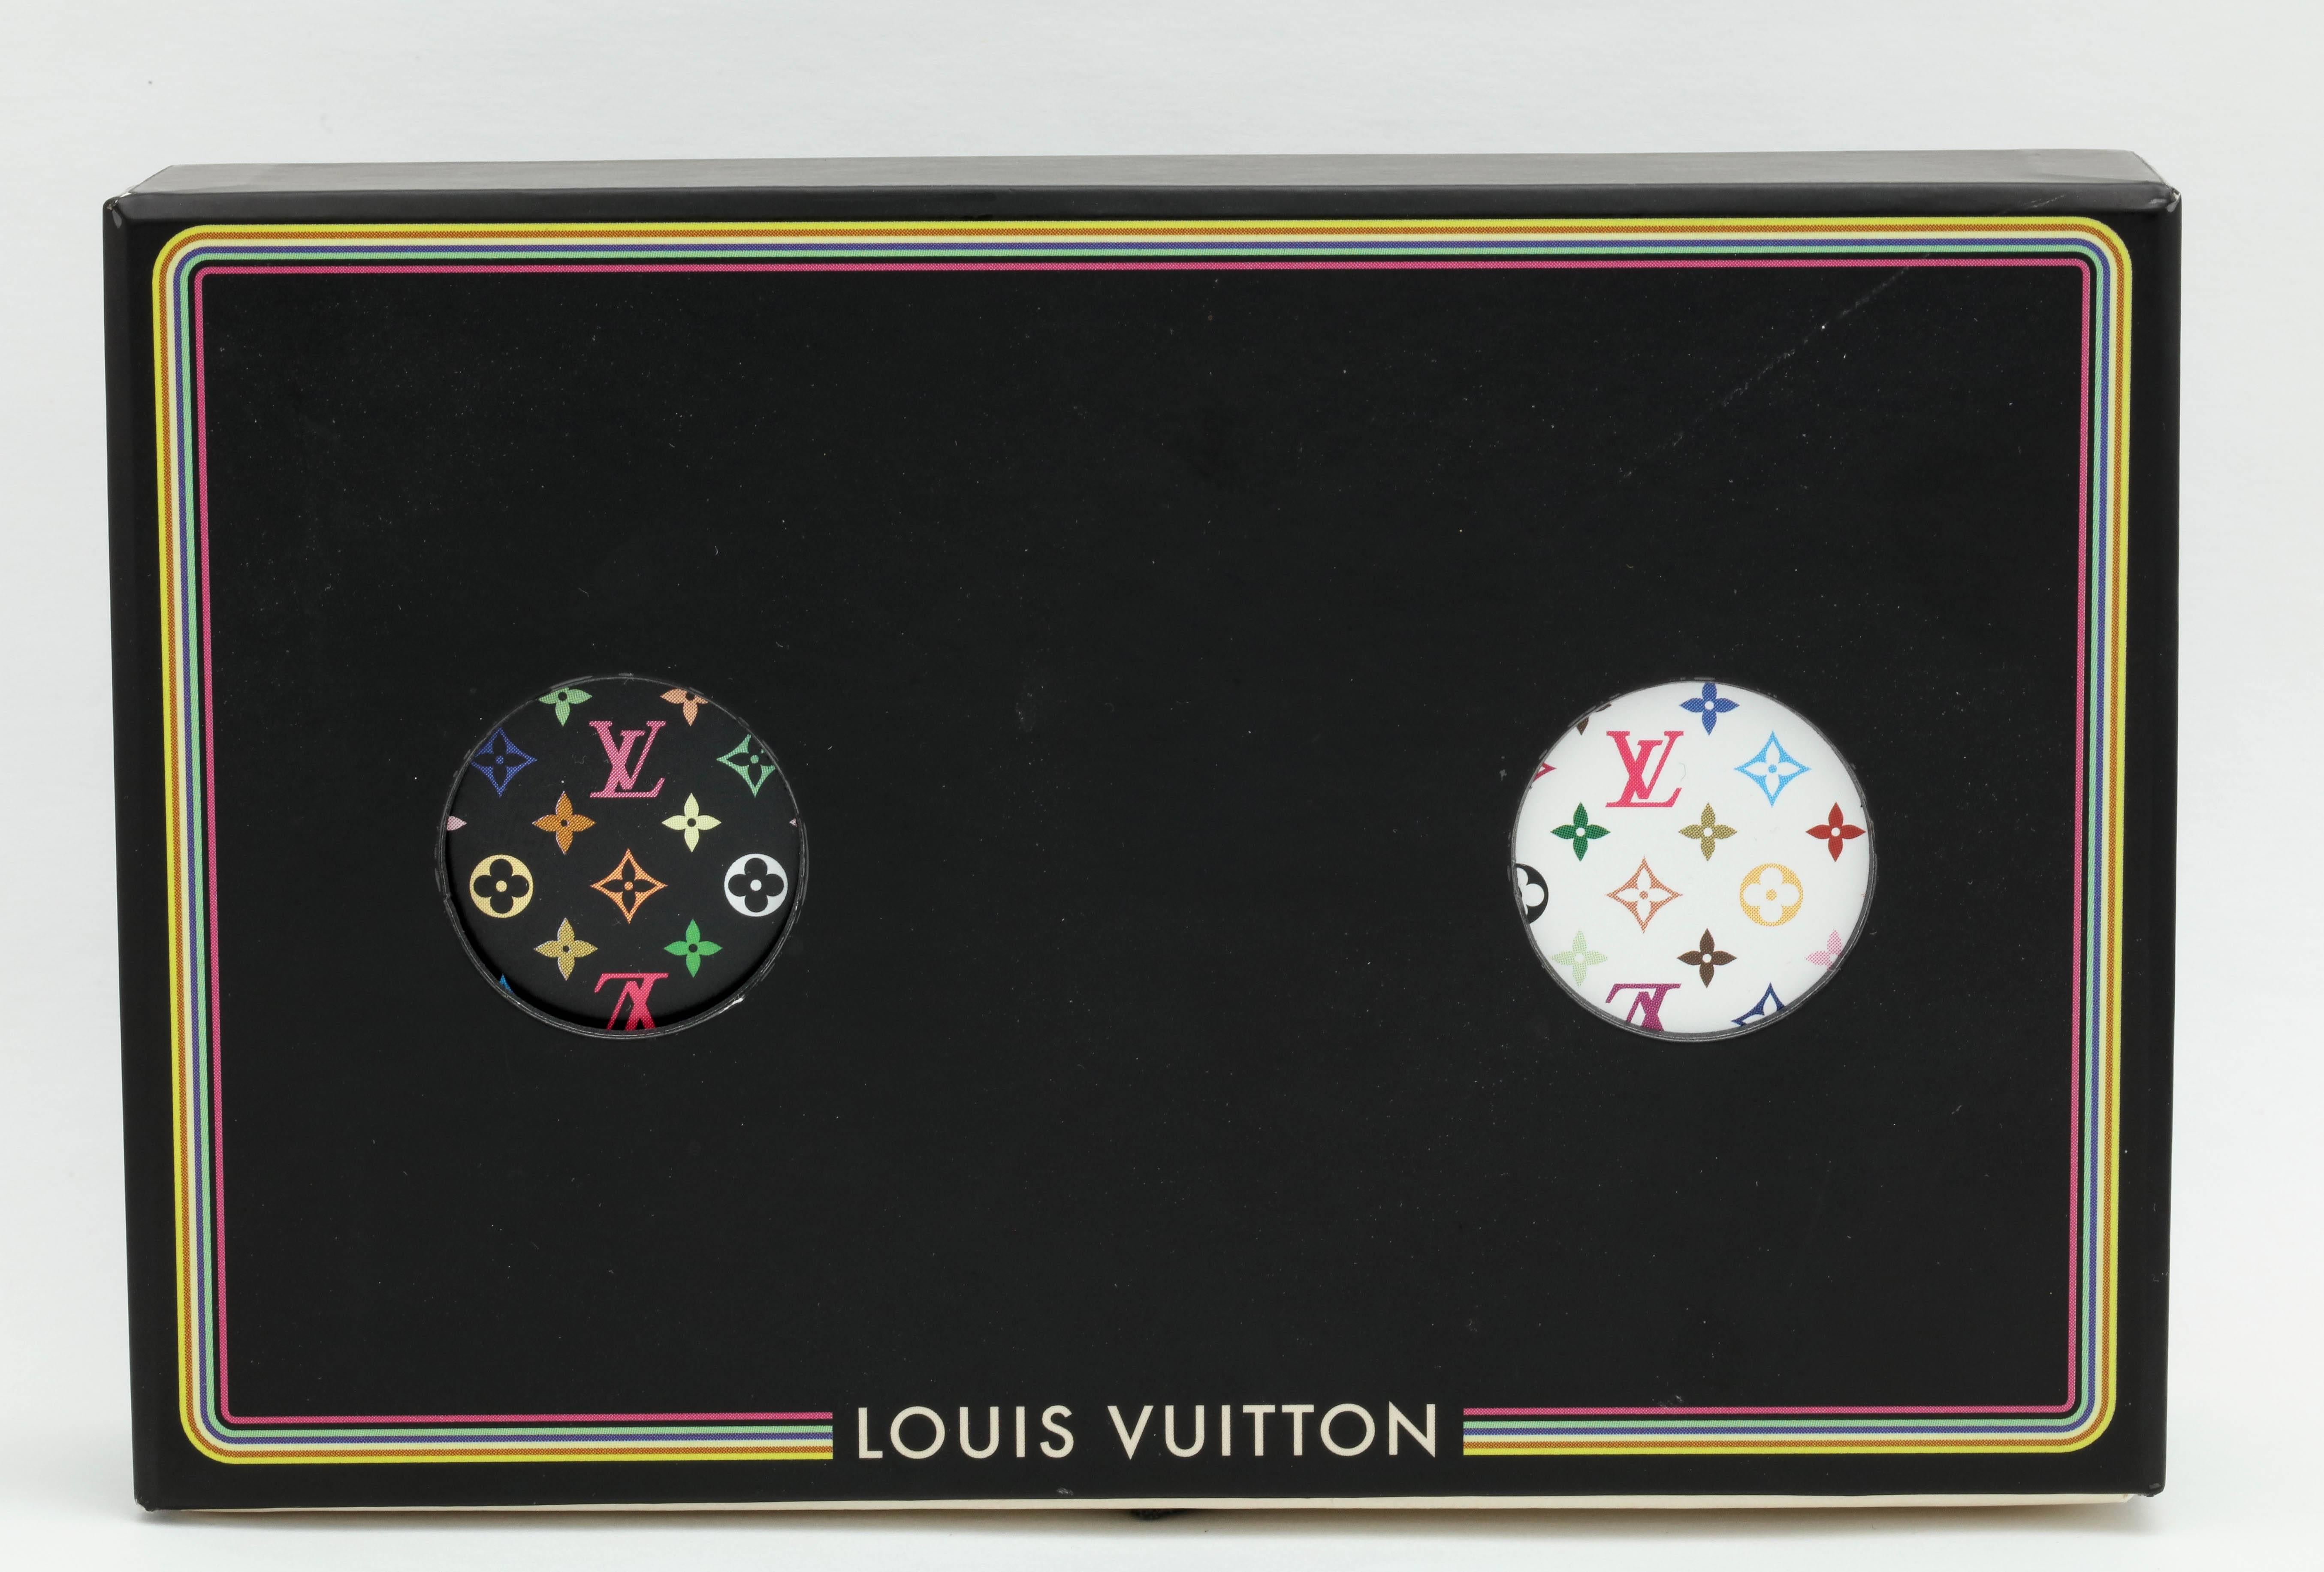 LOUIS VUITTON TAKASHI Murakami Playing Cards Monogram Multi Color Sealed  w/Box $473.69 - PicClick AU